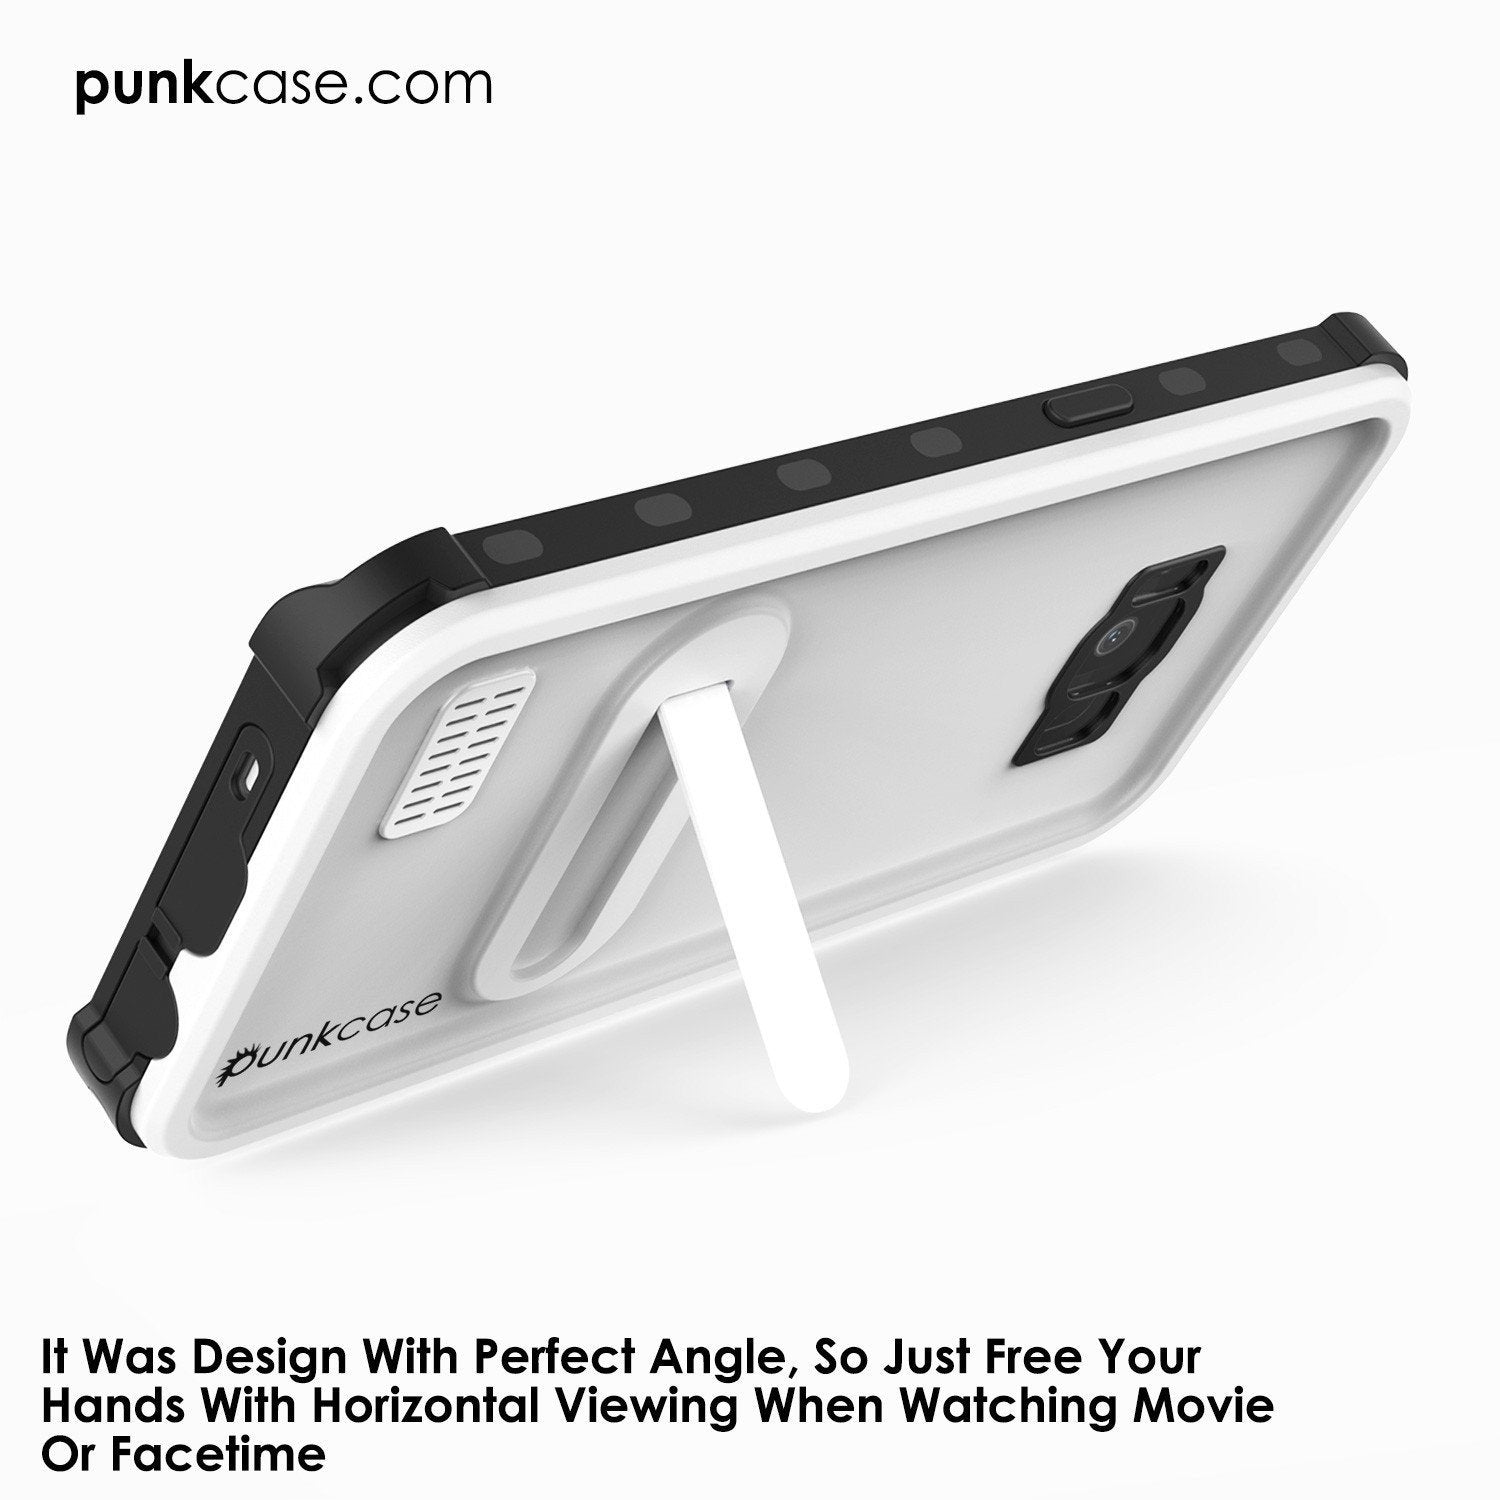 Galaxy S8 Punkcase KickStud Series W/Built-In Kickstand Case, White